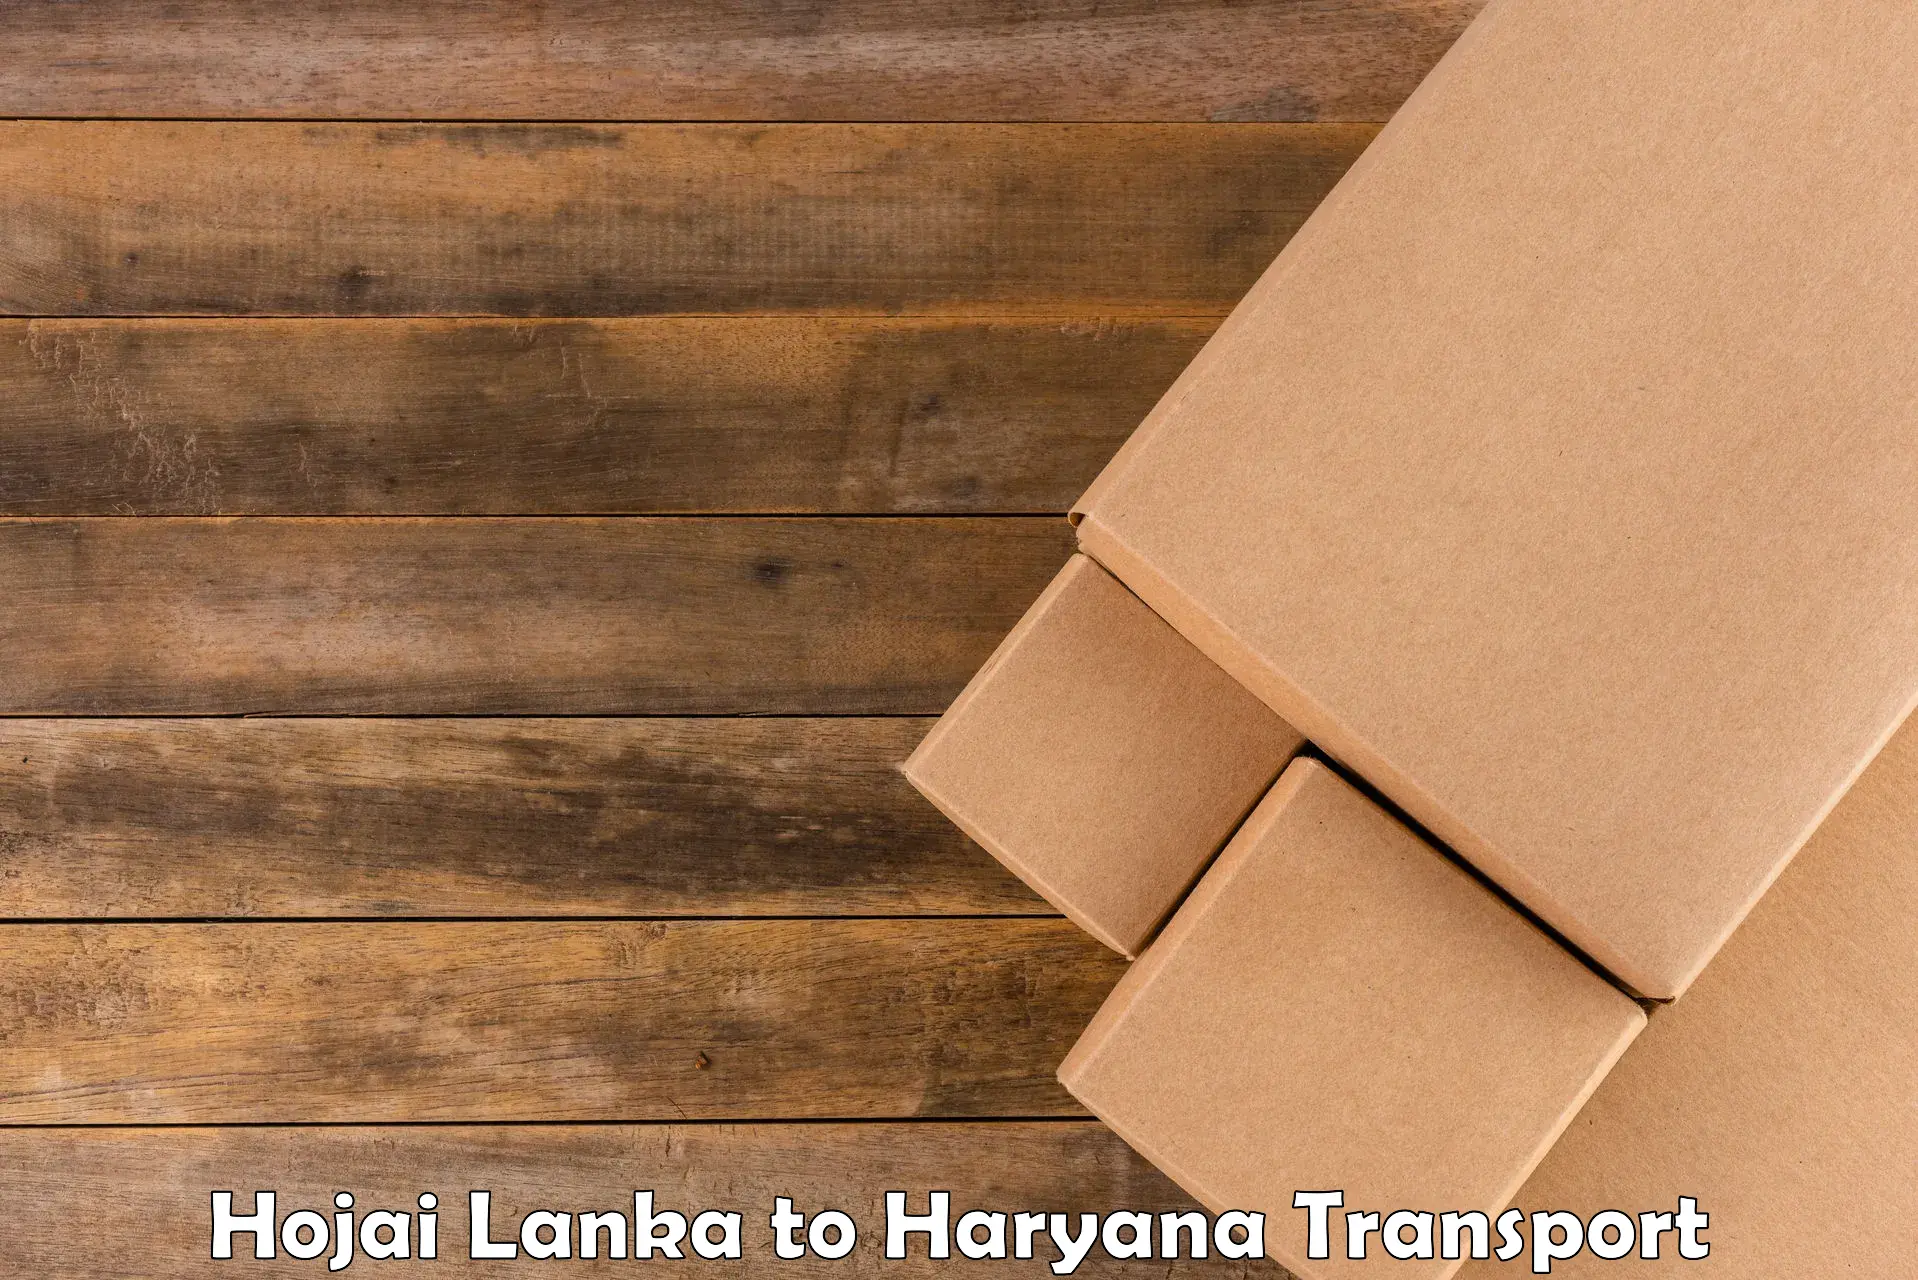 Bike shipping service Hojai Lanka to Haryana